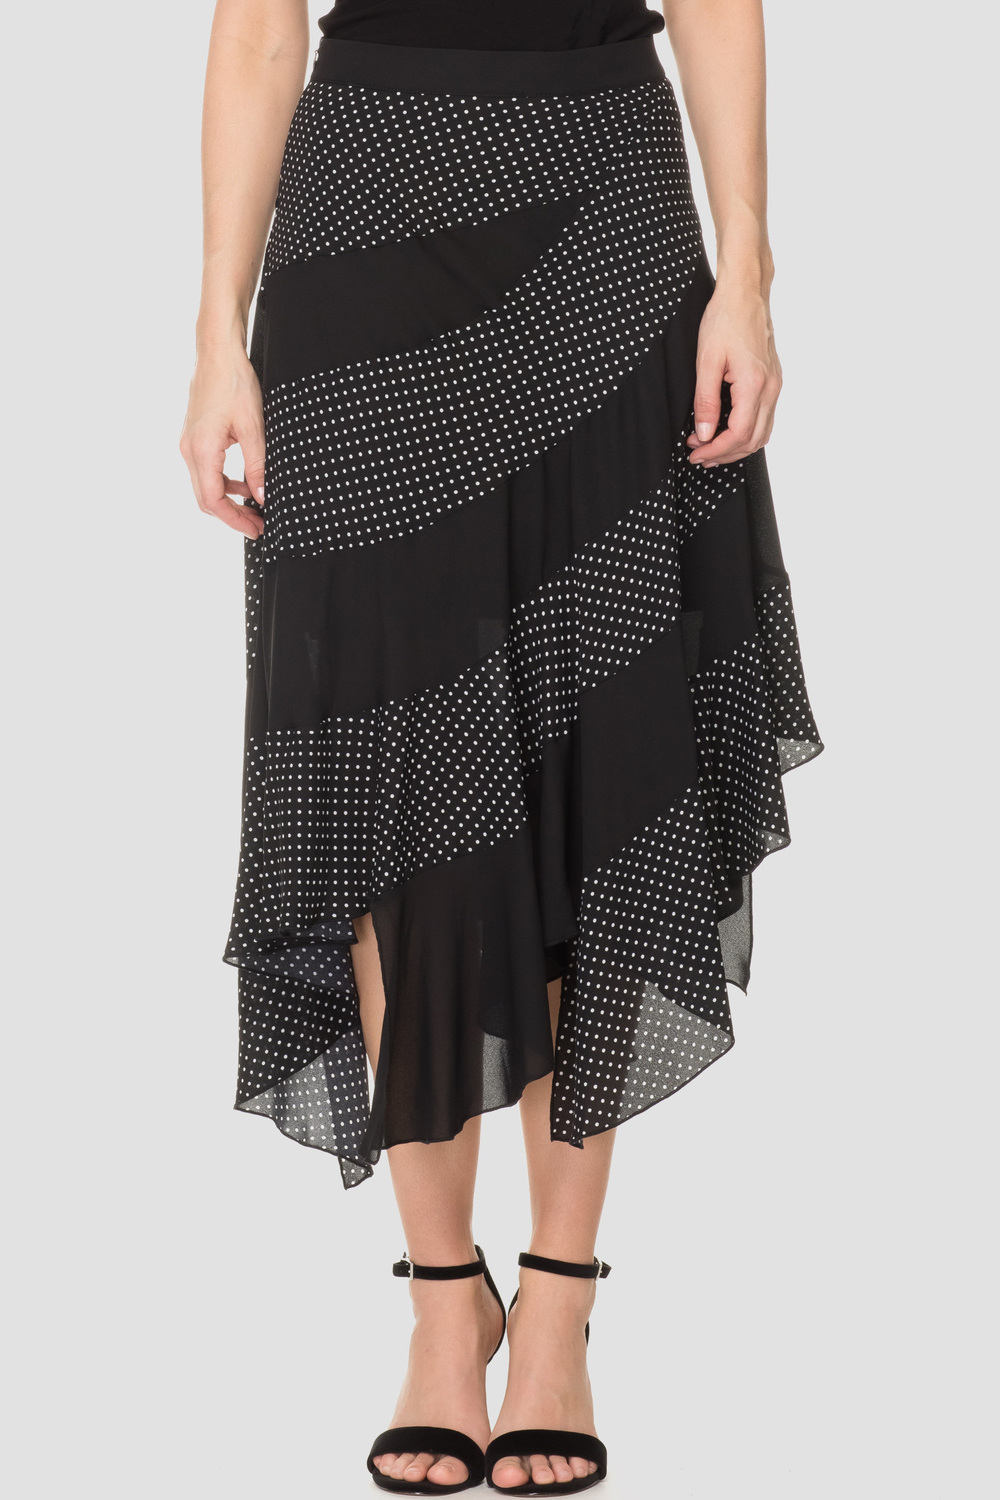 Joseph Ribkoff Skirt Style 191612. Black/white